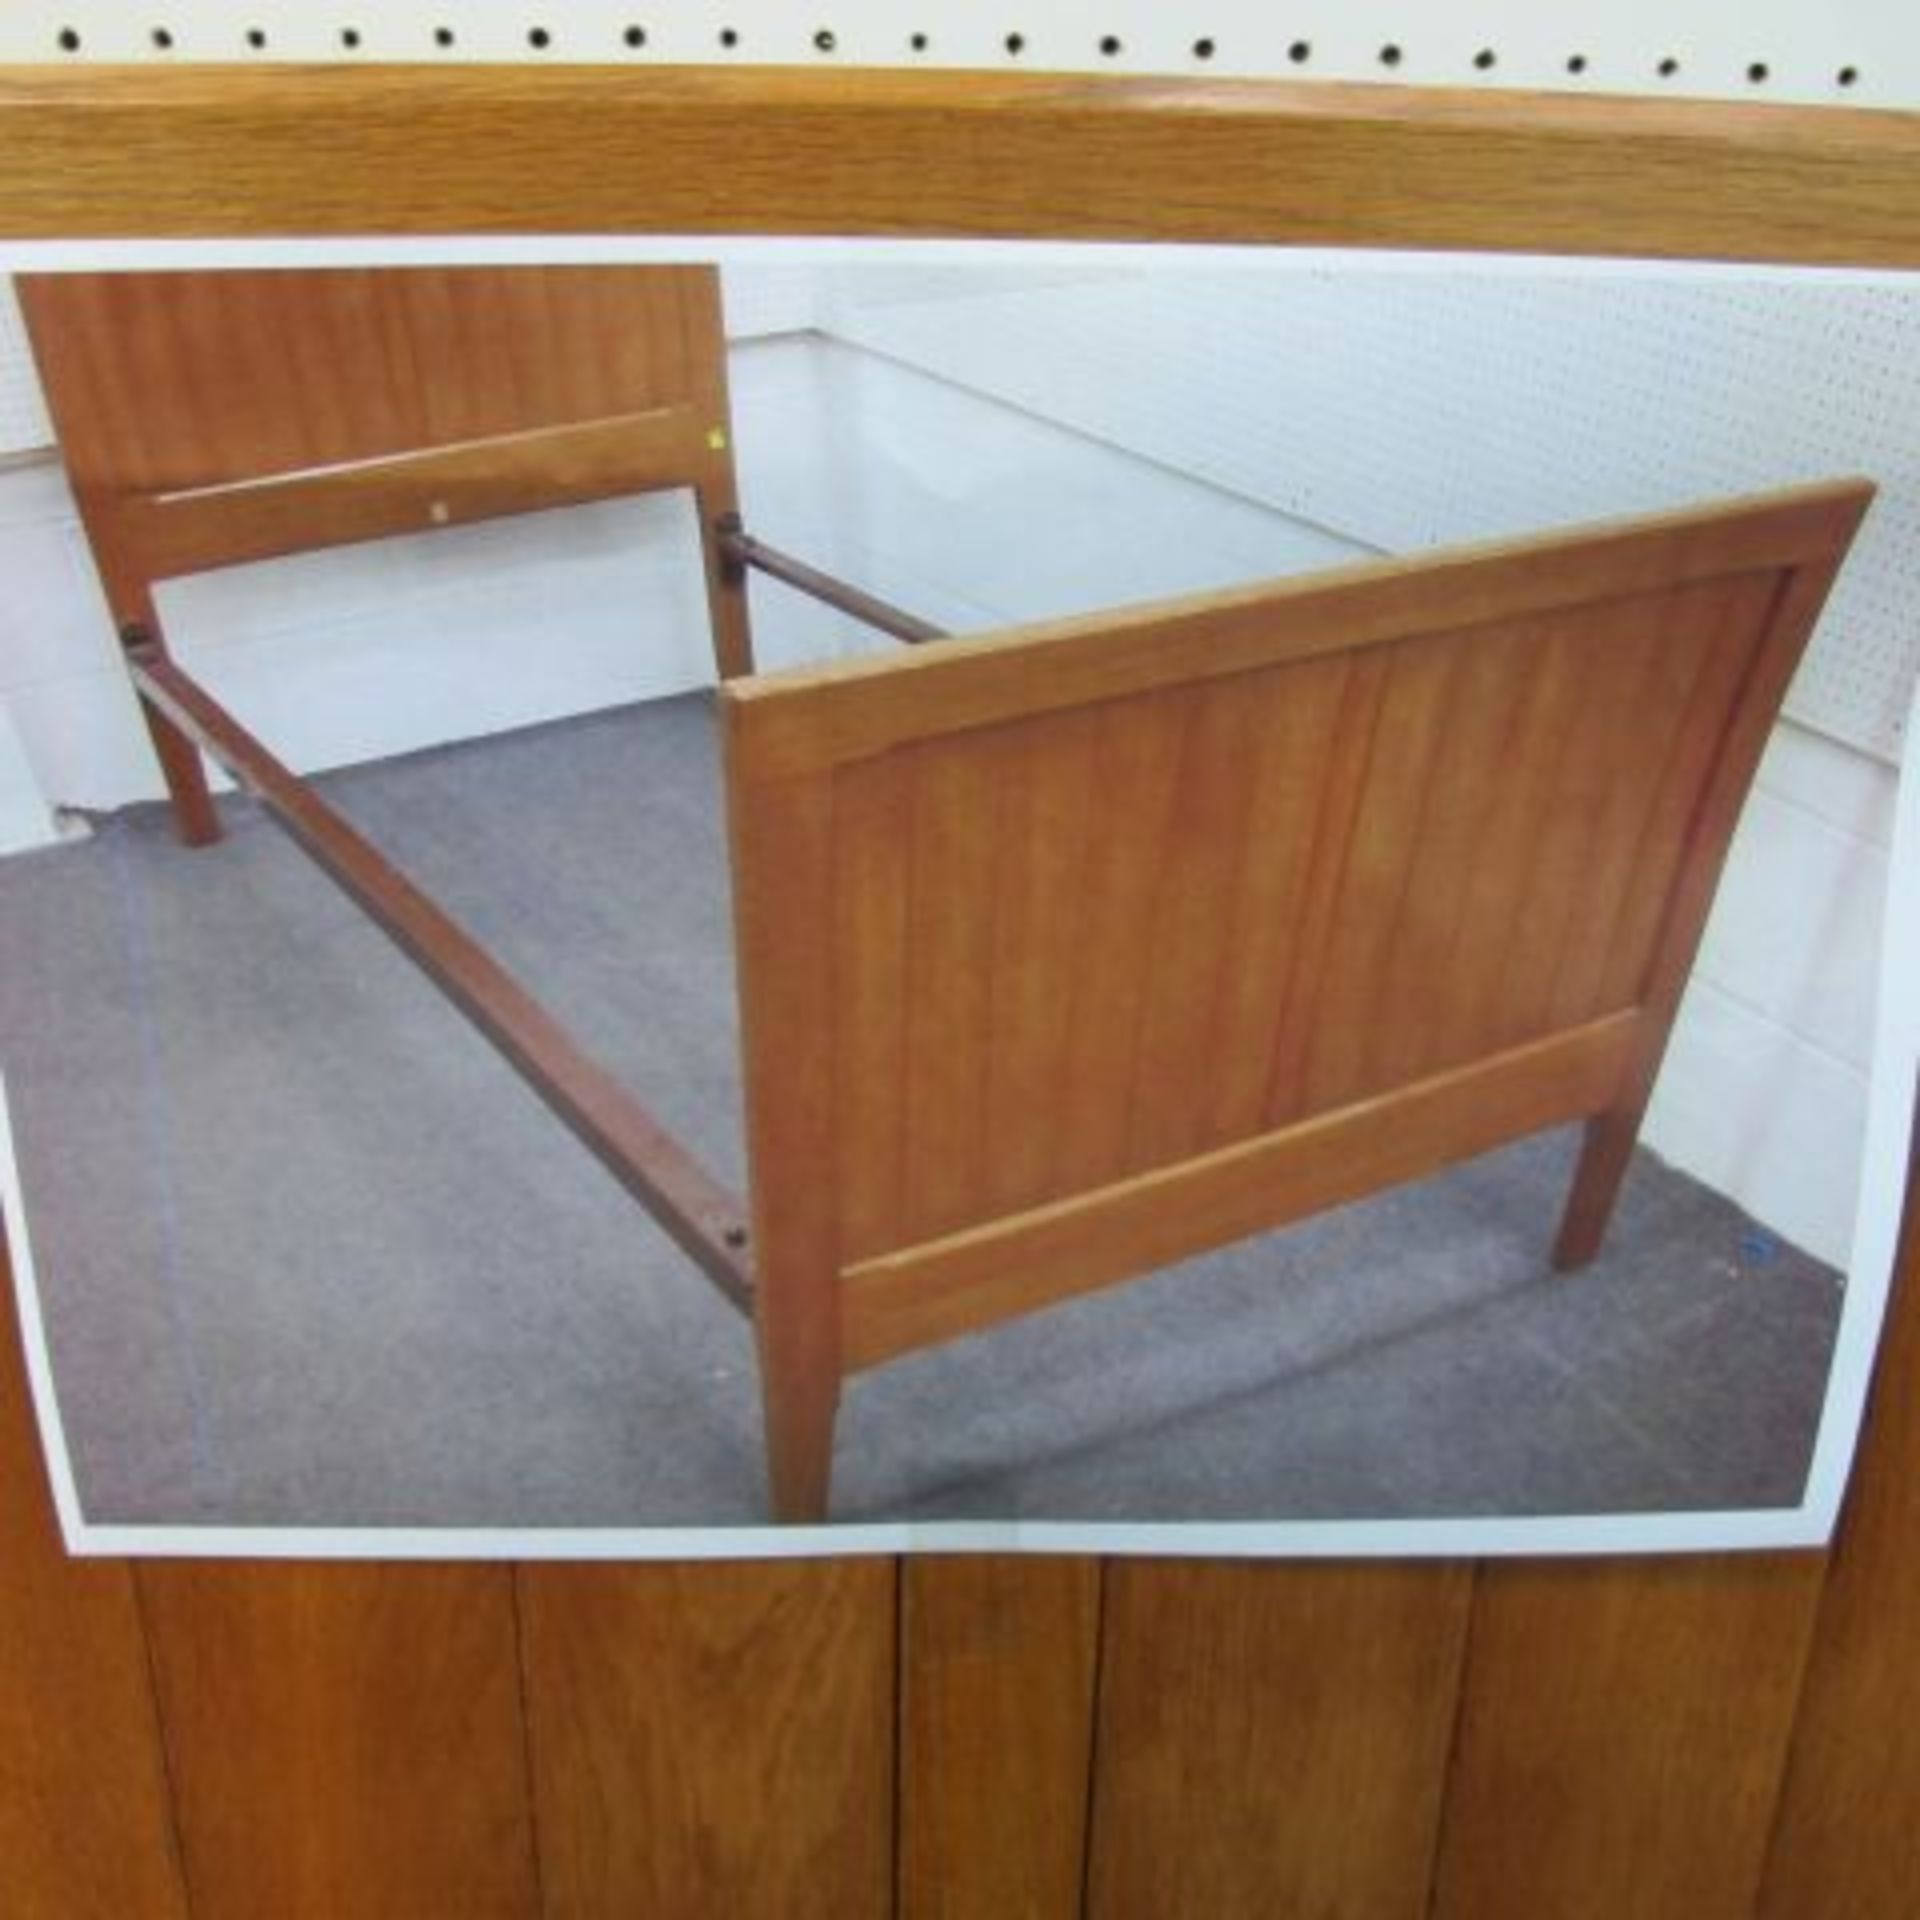 A Plain Panelled Oak Single Bed Frame.  (est. £10-£20)